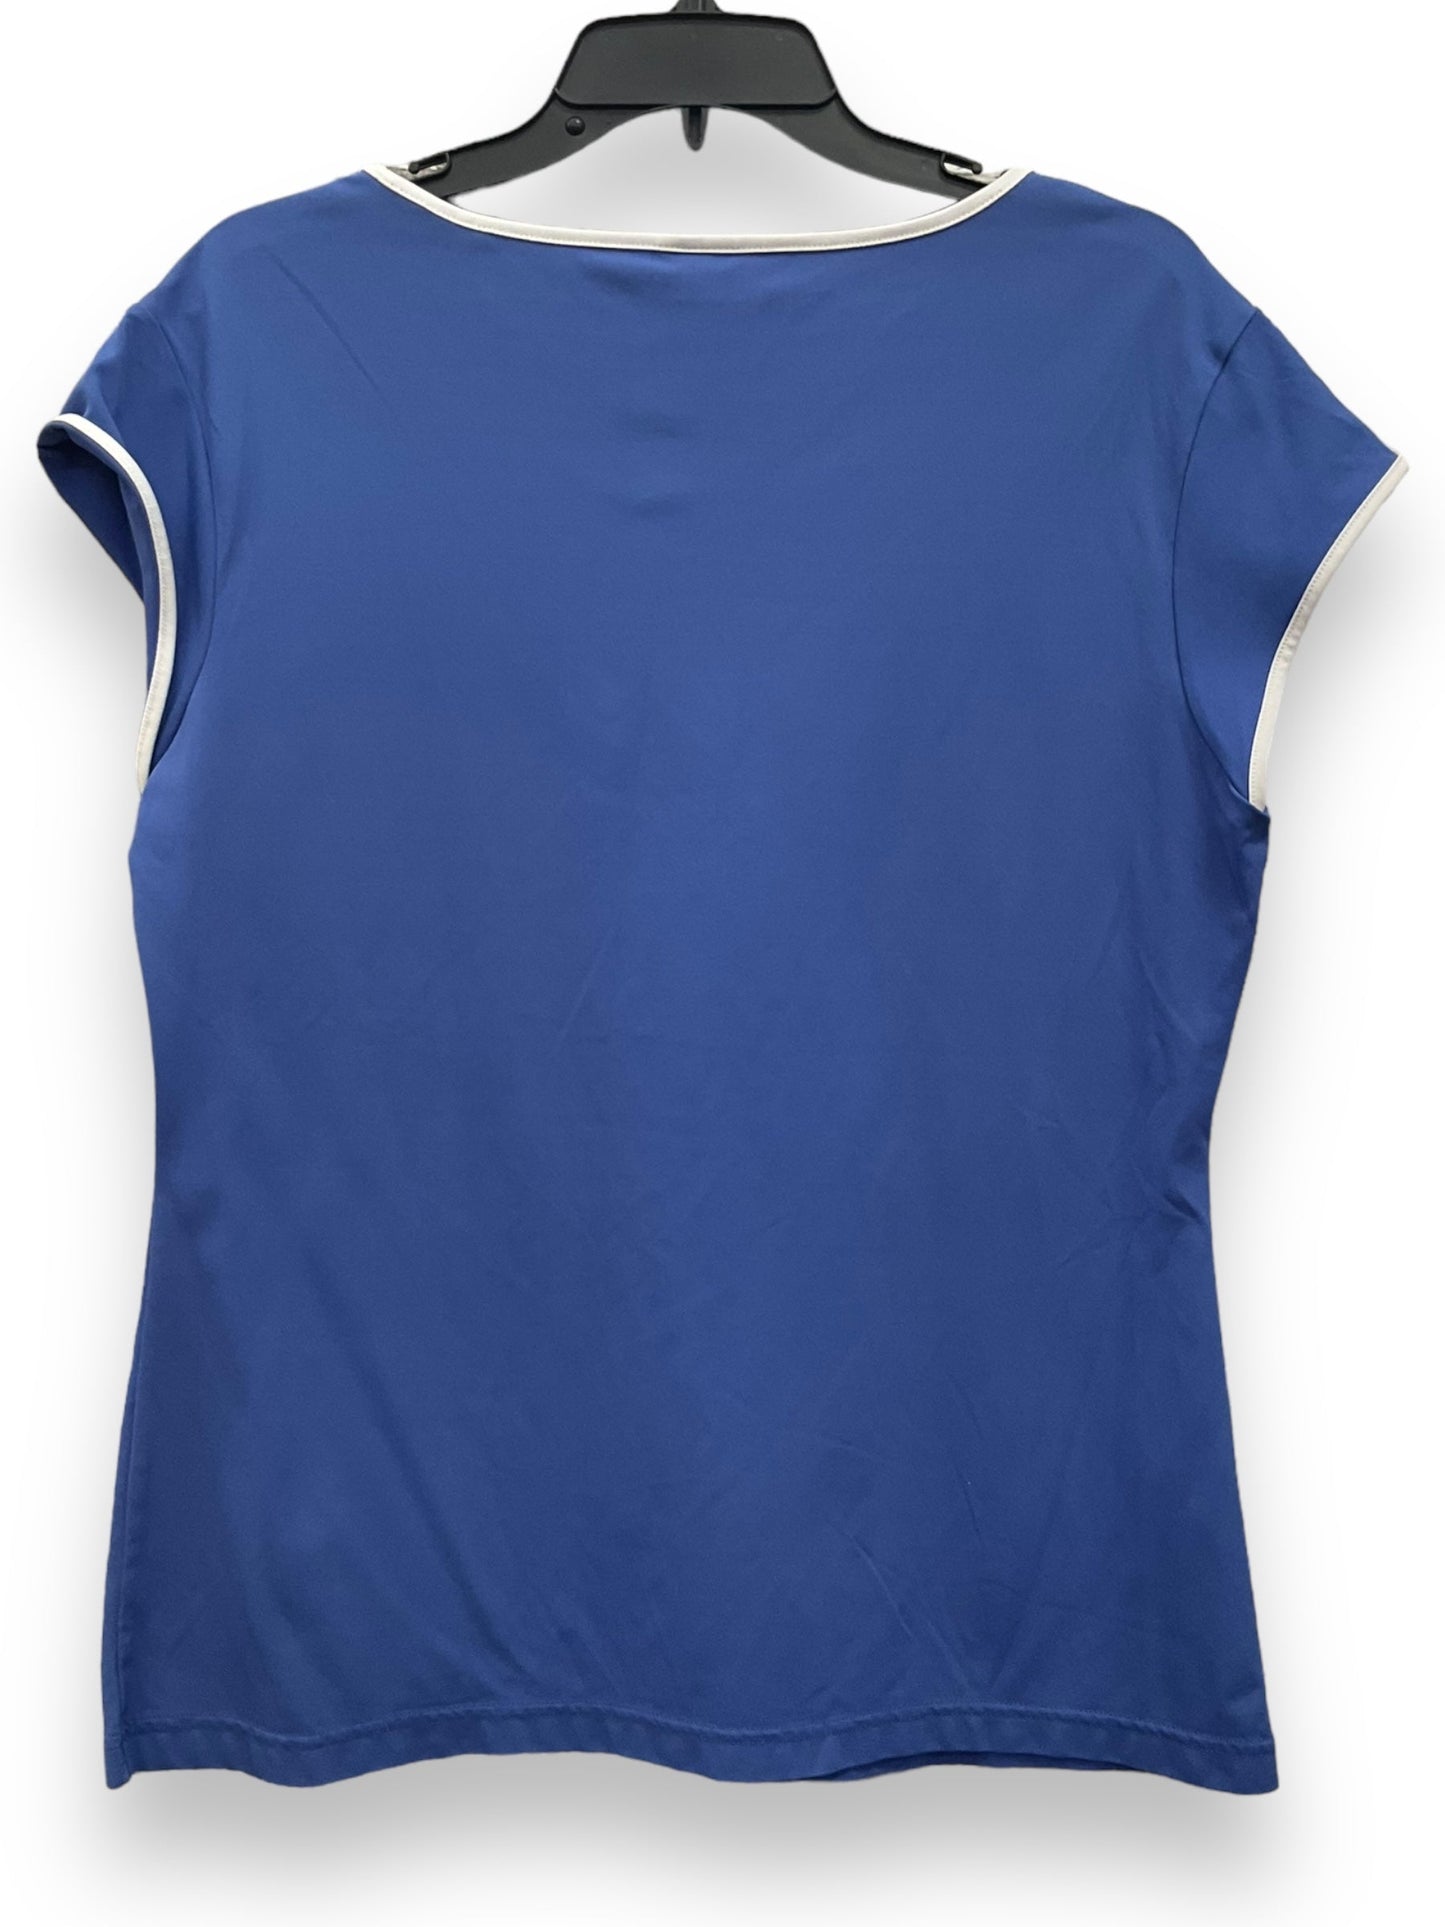 Blue Athletic Top Short Sleeve Adidas, Size Xl